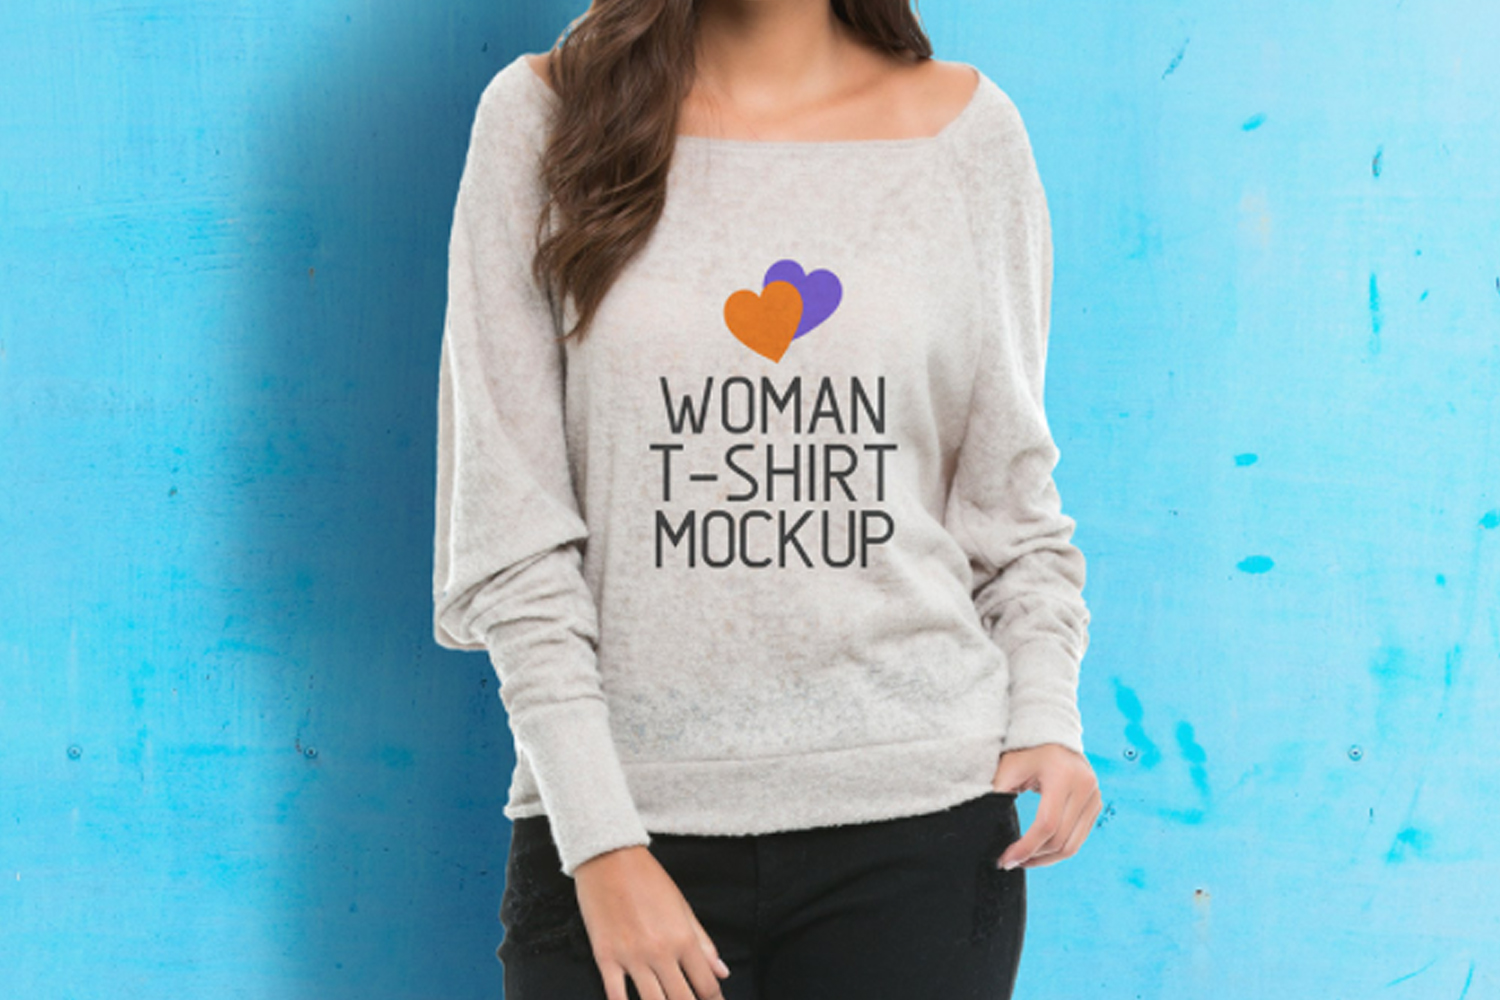 Woman T-Shirt Mockup Free Download